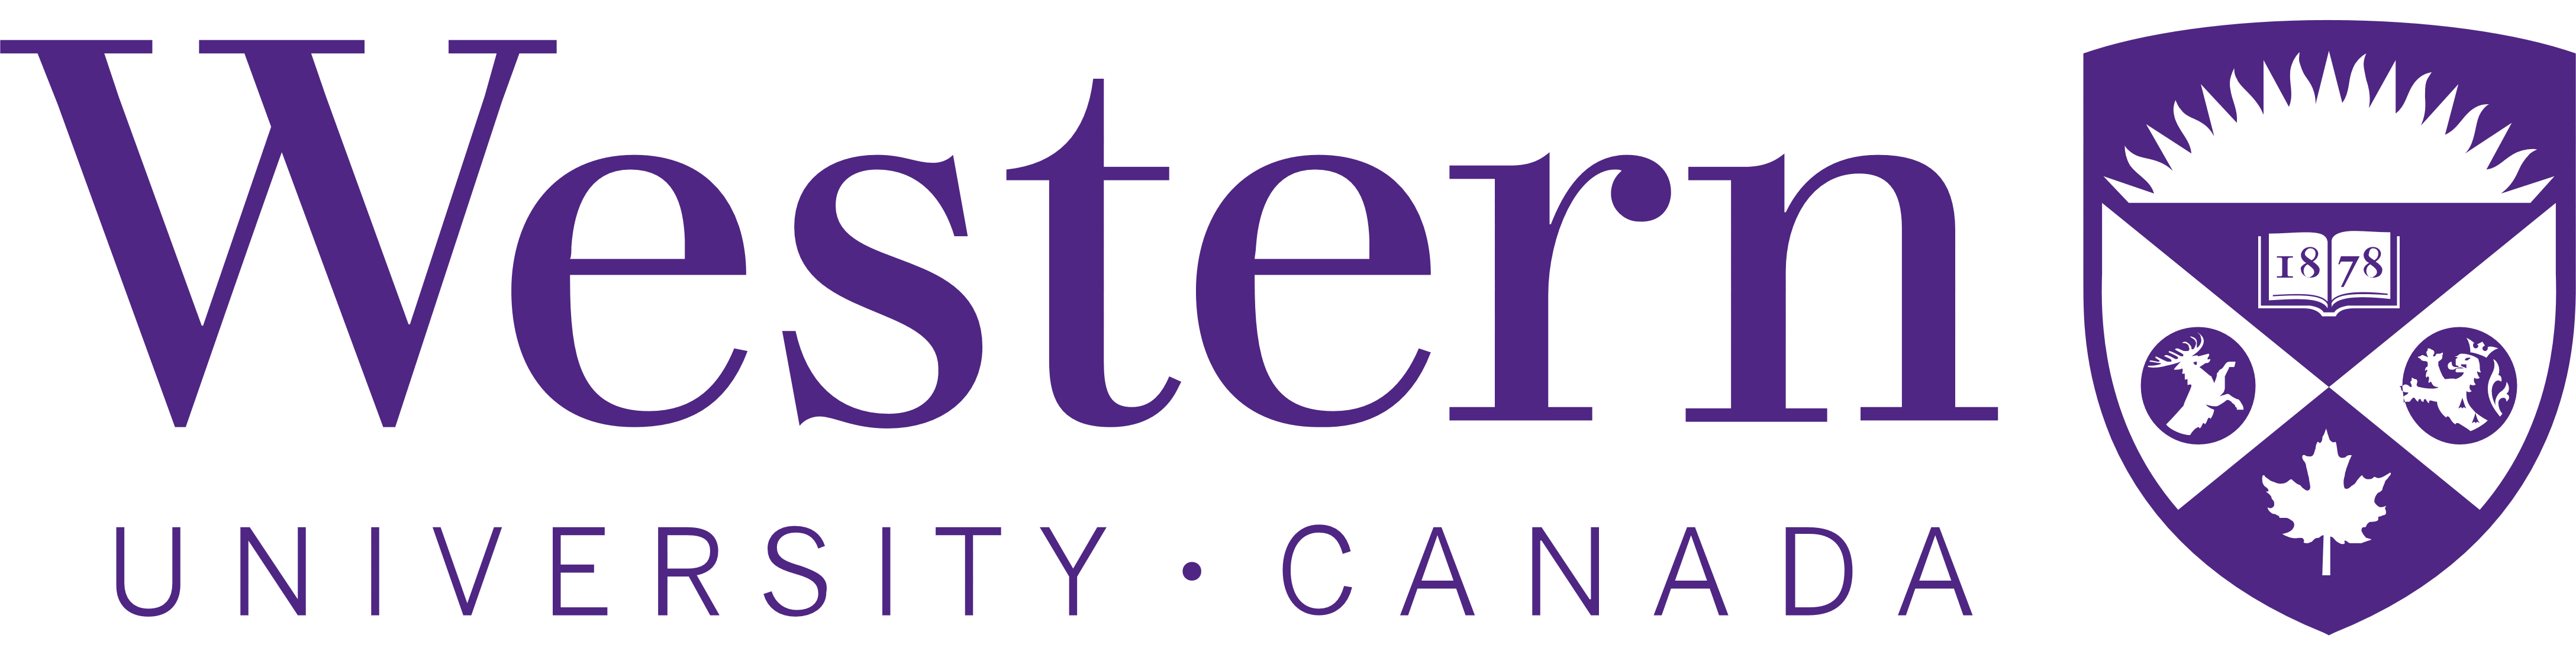 Western_University_Canada_logo.png